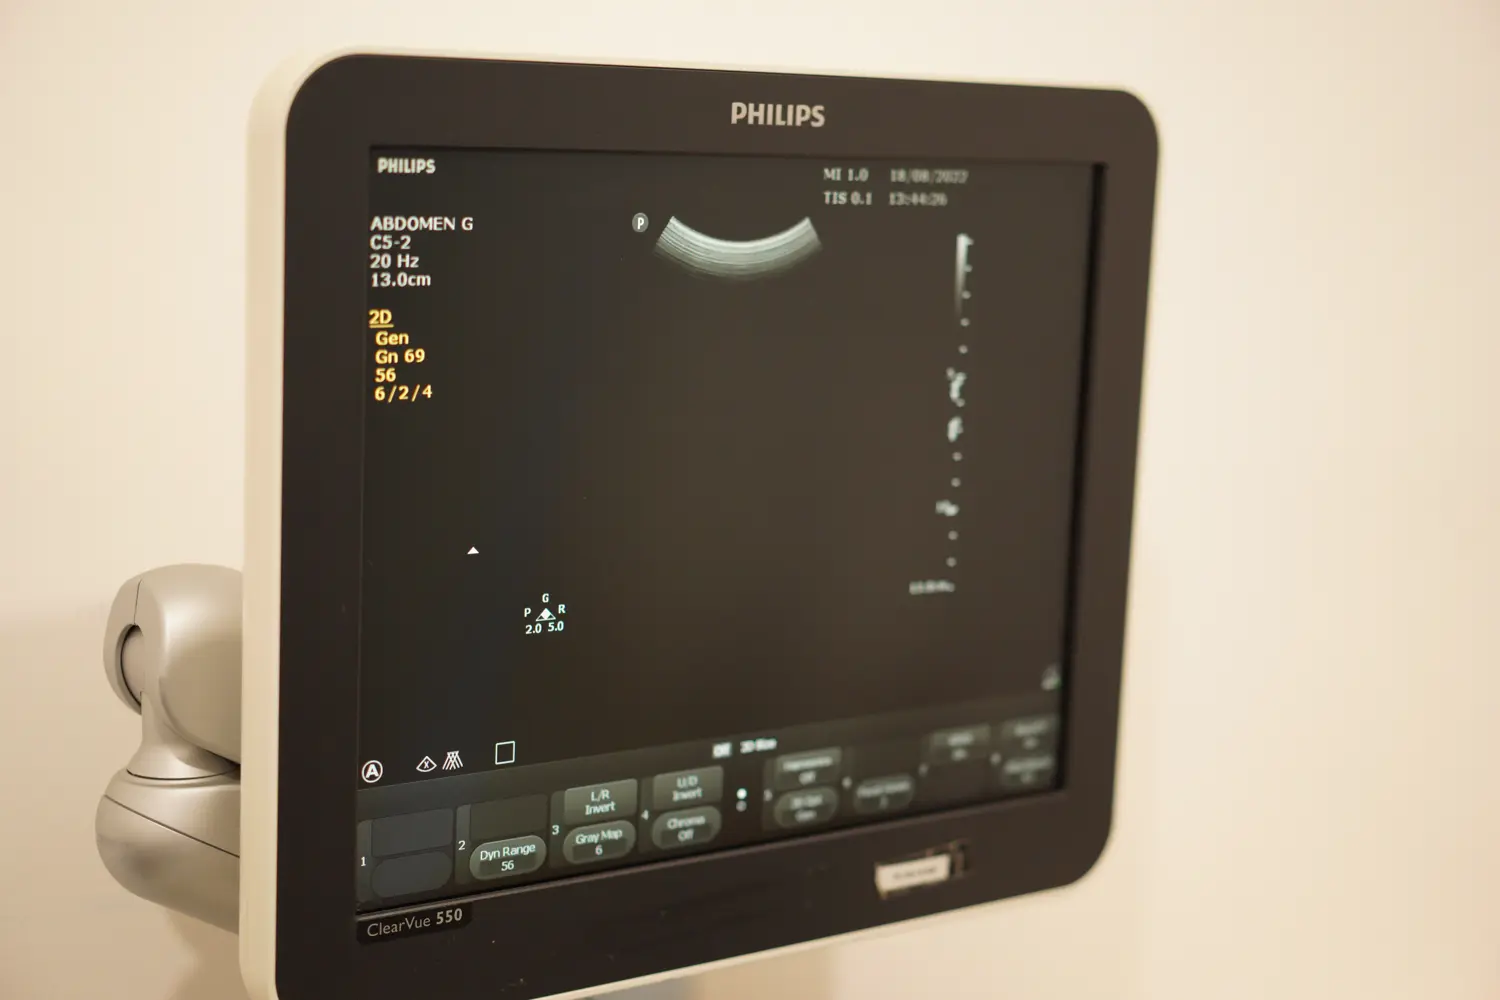 Screen of ultrasound machine showing patient undergoing ultrasound scan